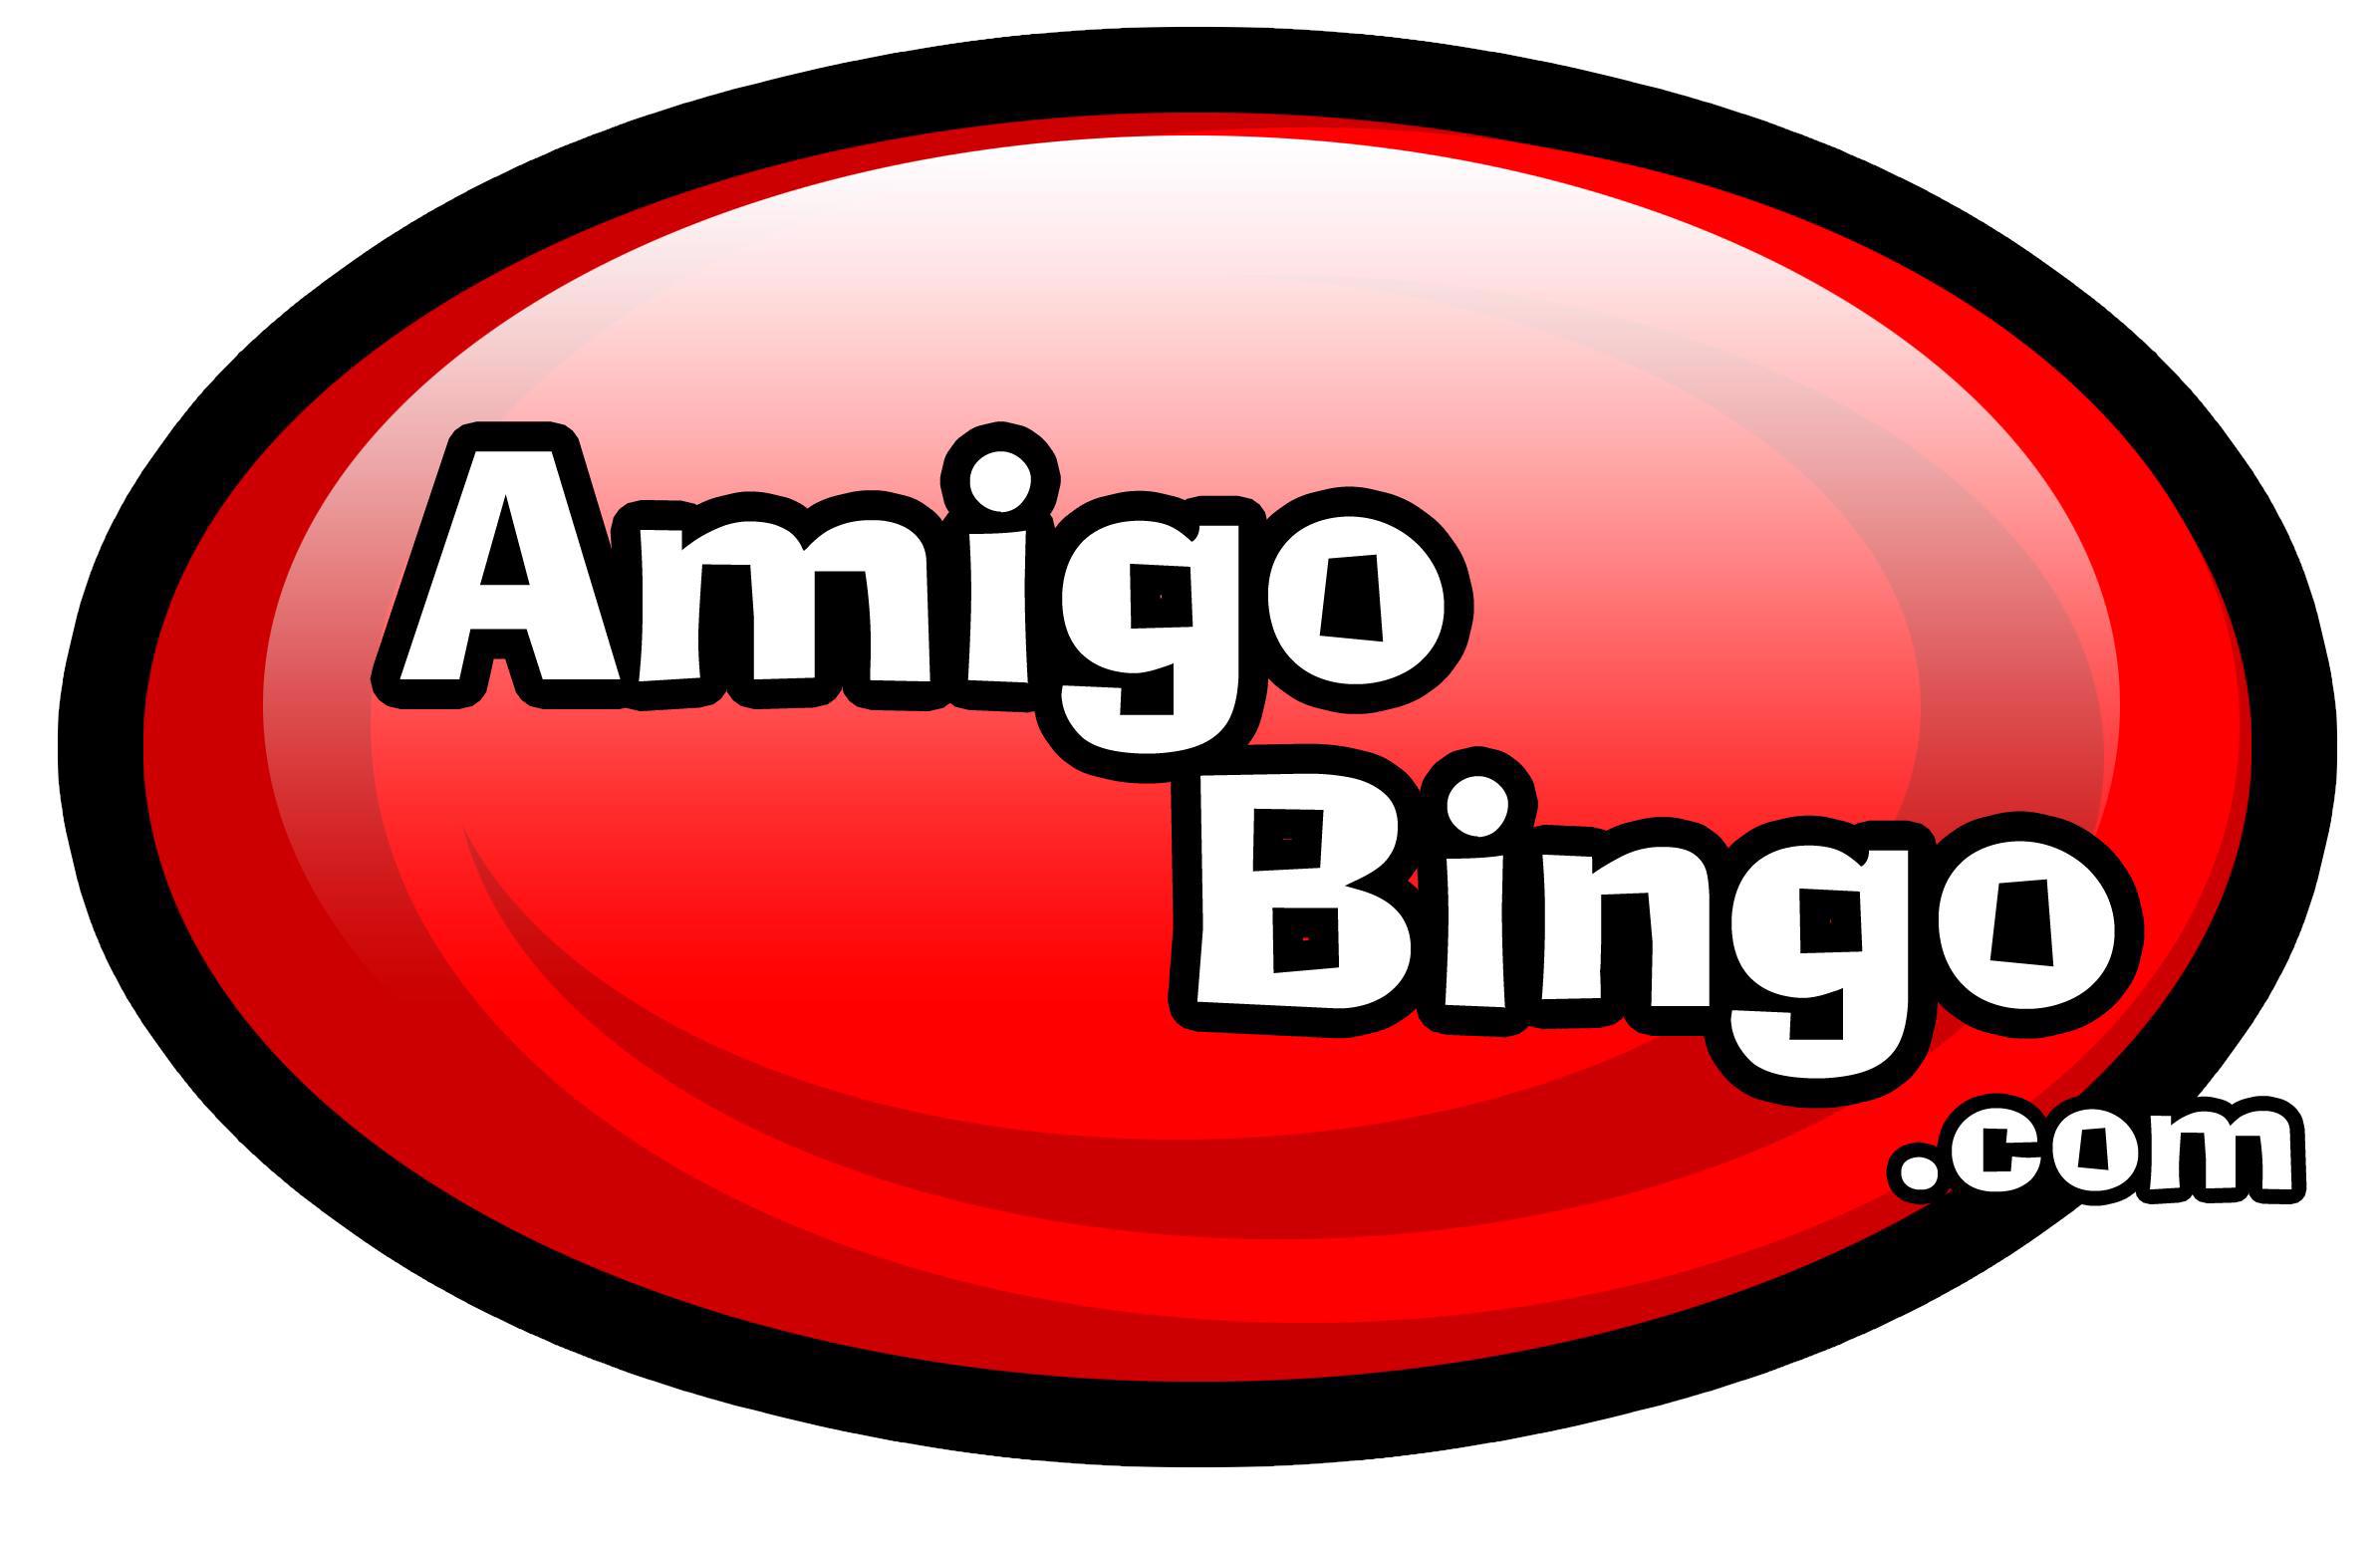 The World's First Bingo Network